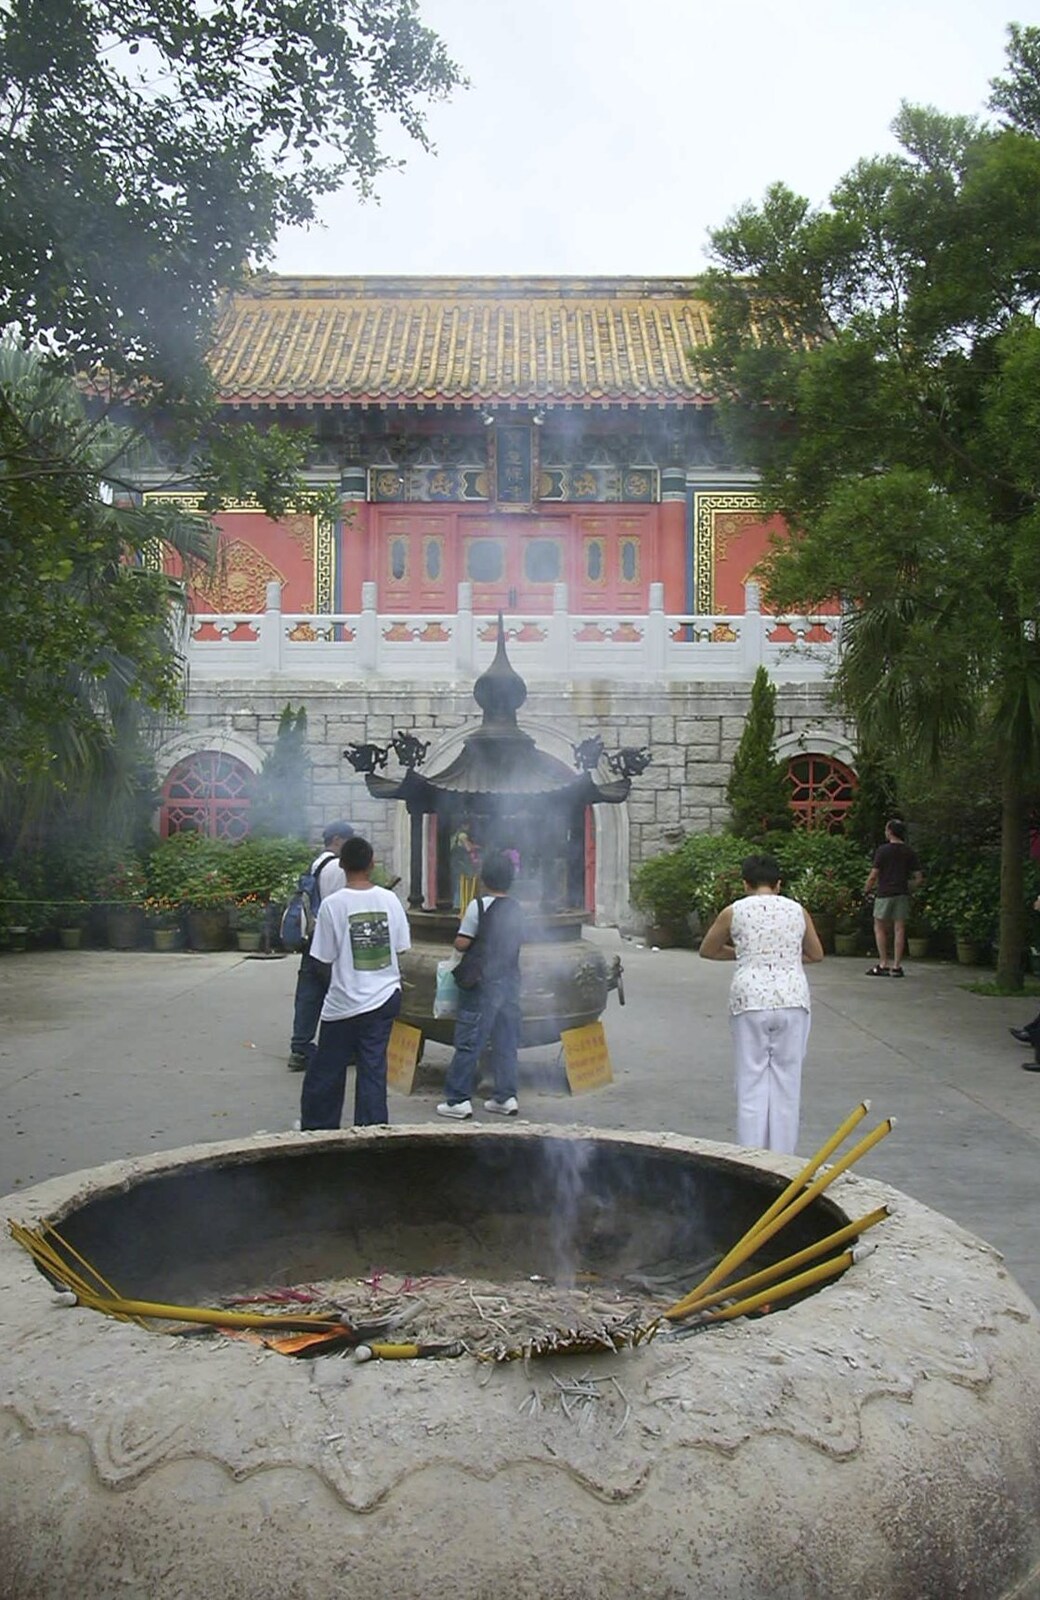 Lantau Island and the Po Lin Monastery, Hong Kong, China - 14th August 2001: Burning incense sticks